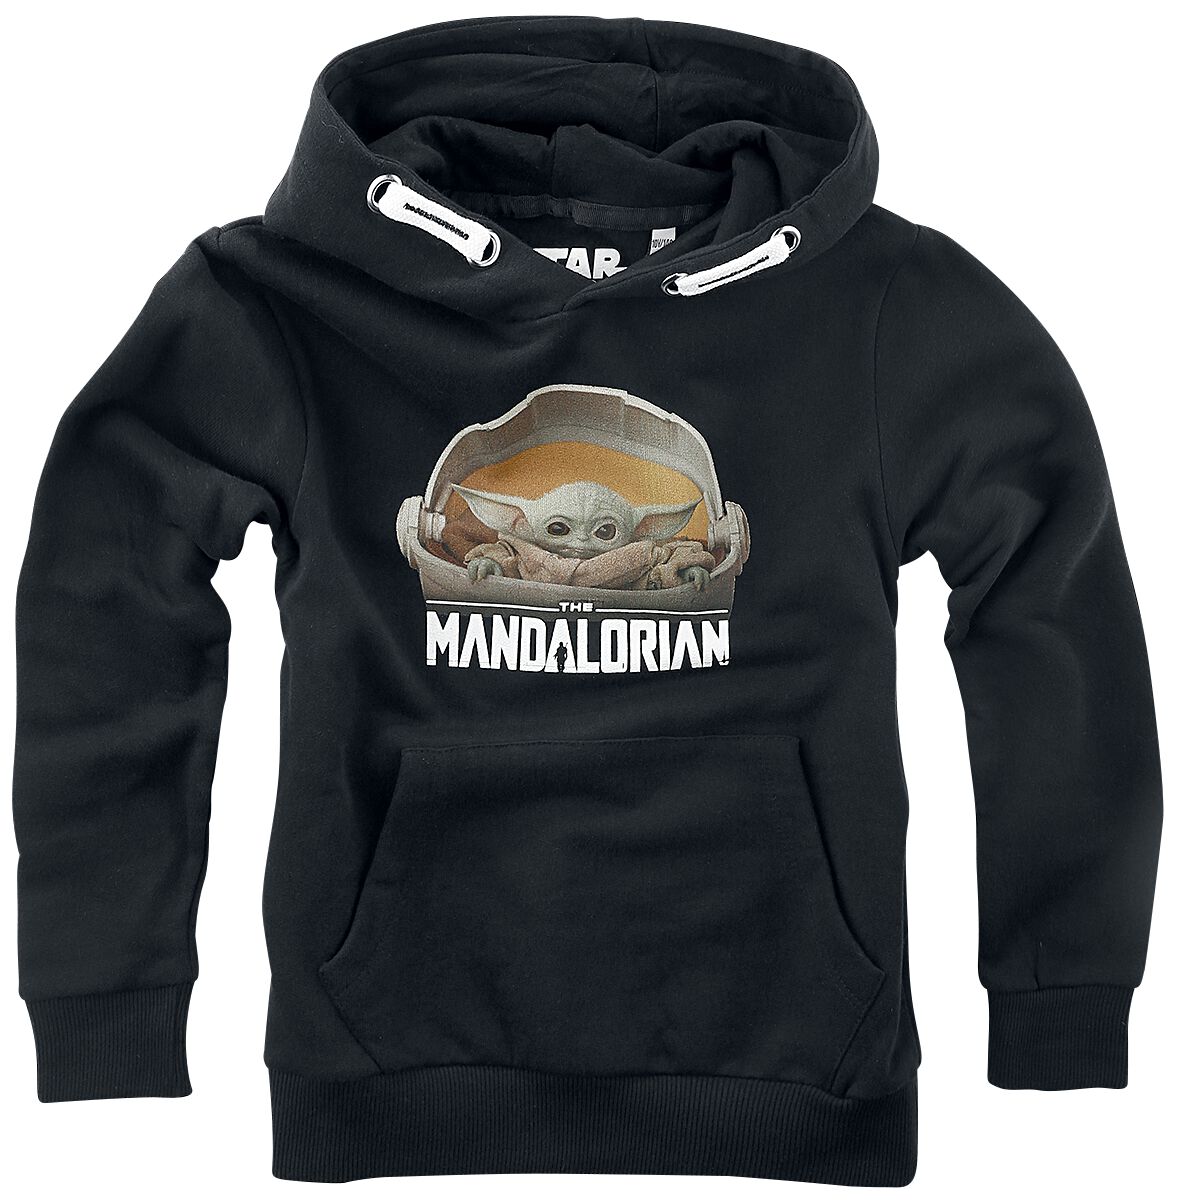 Star Wars Kids - The Mandalorian - Baby Yoda - Grogu Hooded sweater black